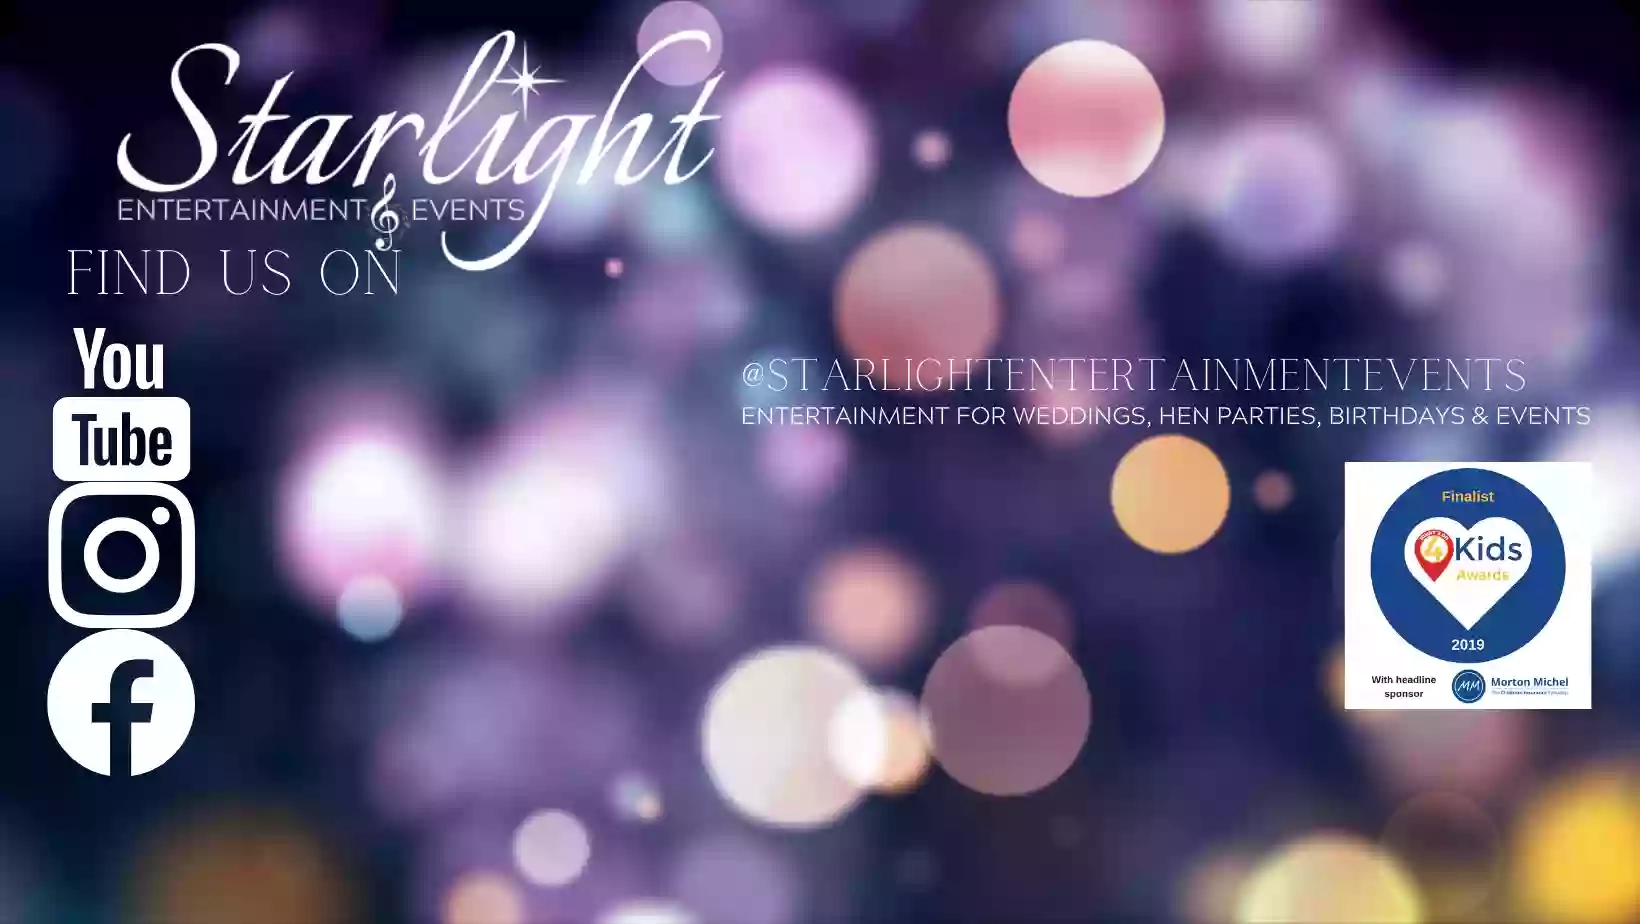 Starlight Entertainment & Events